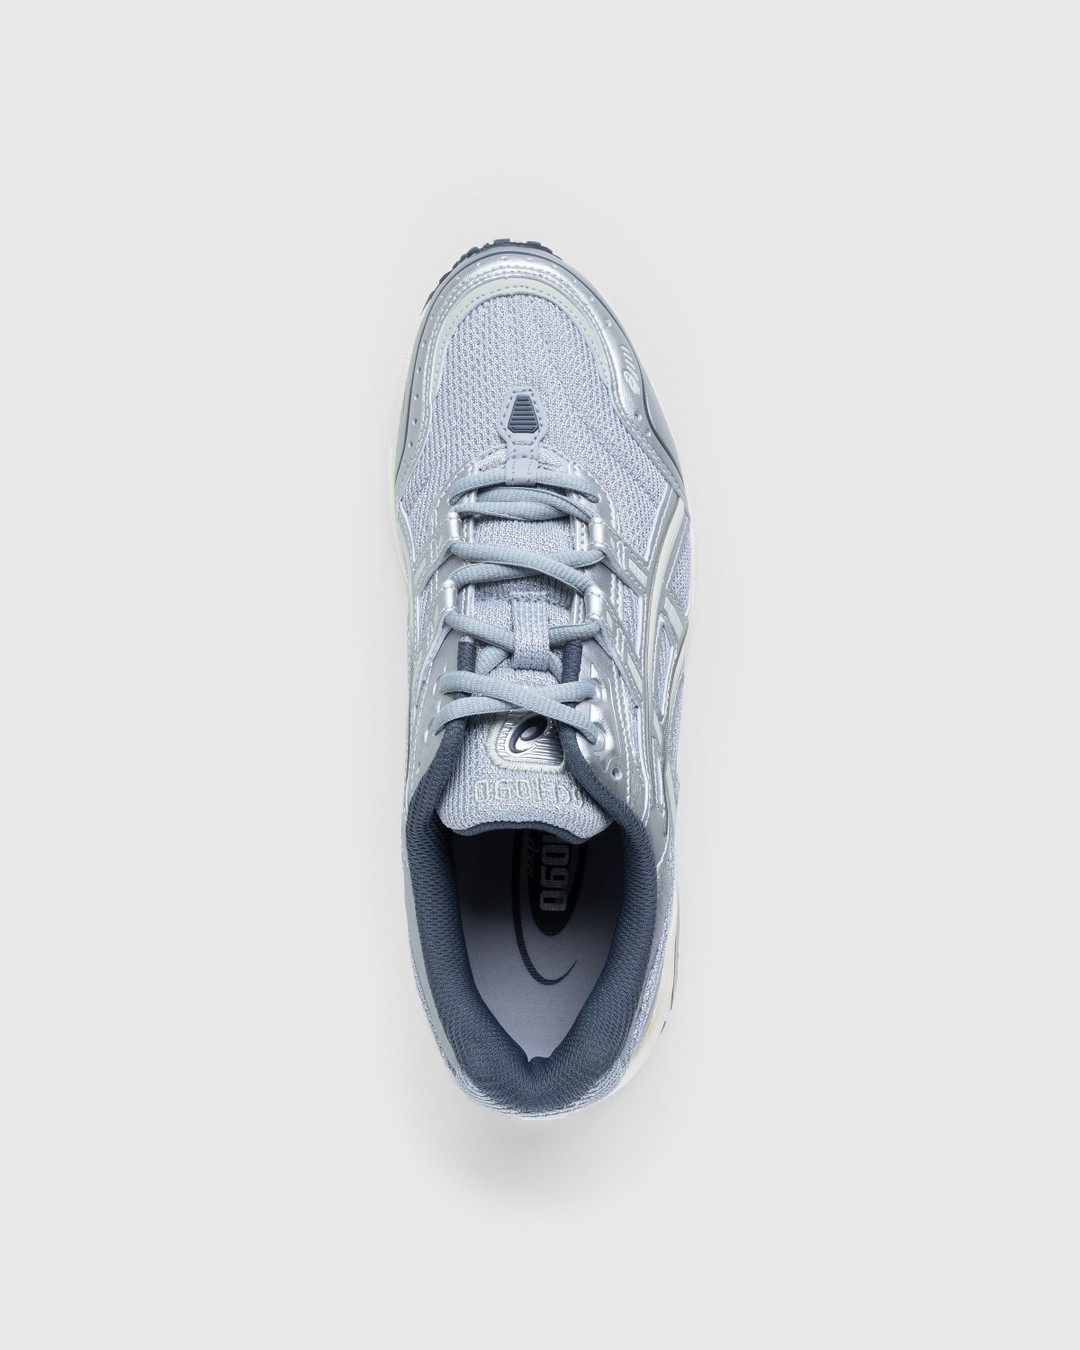 asics – GEL-1090 Piedmont Gray/Tarmac - Low Top Sneakers - Grey - Image 5